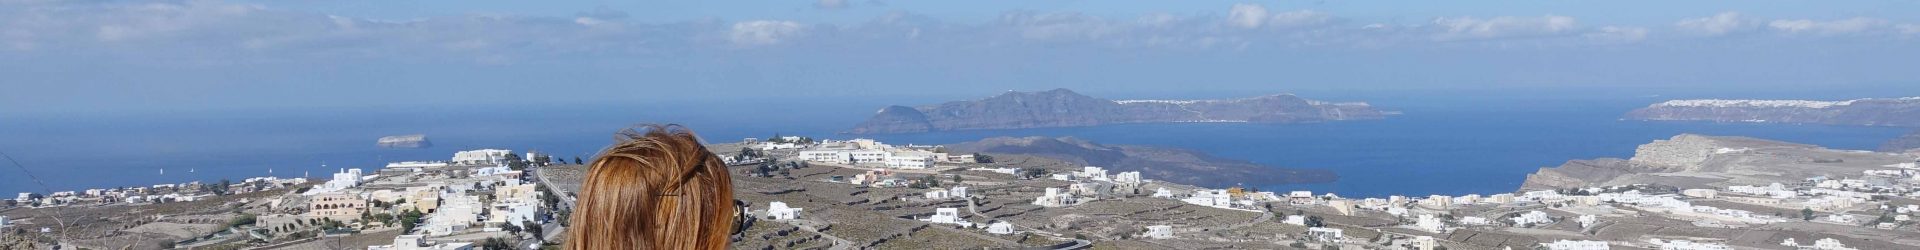 Pyrgos Kallistis: il villaggio pittoresco di Santorini